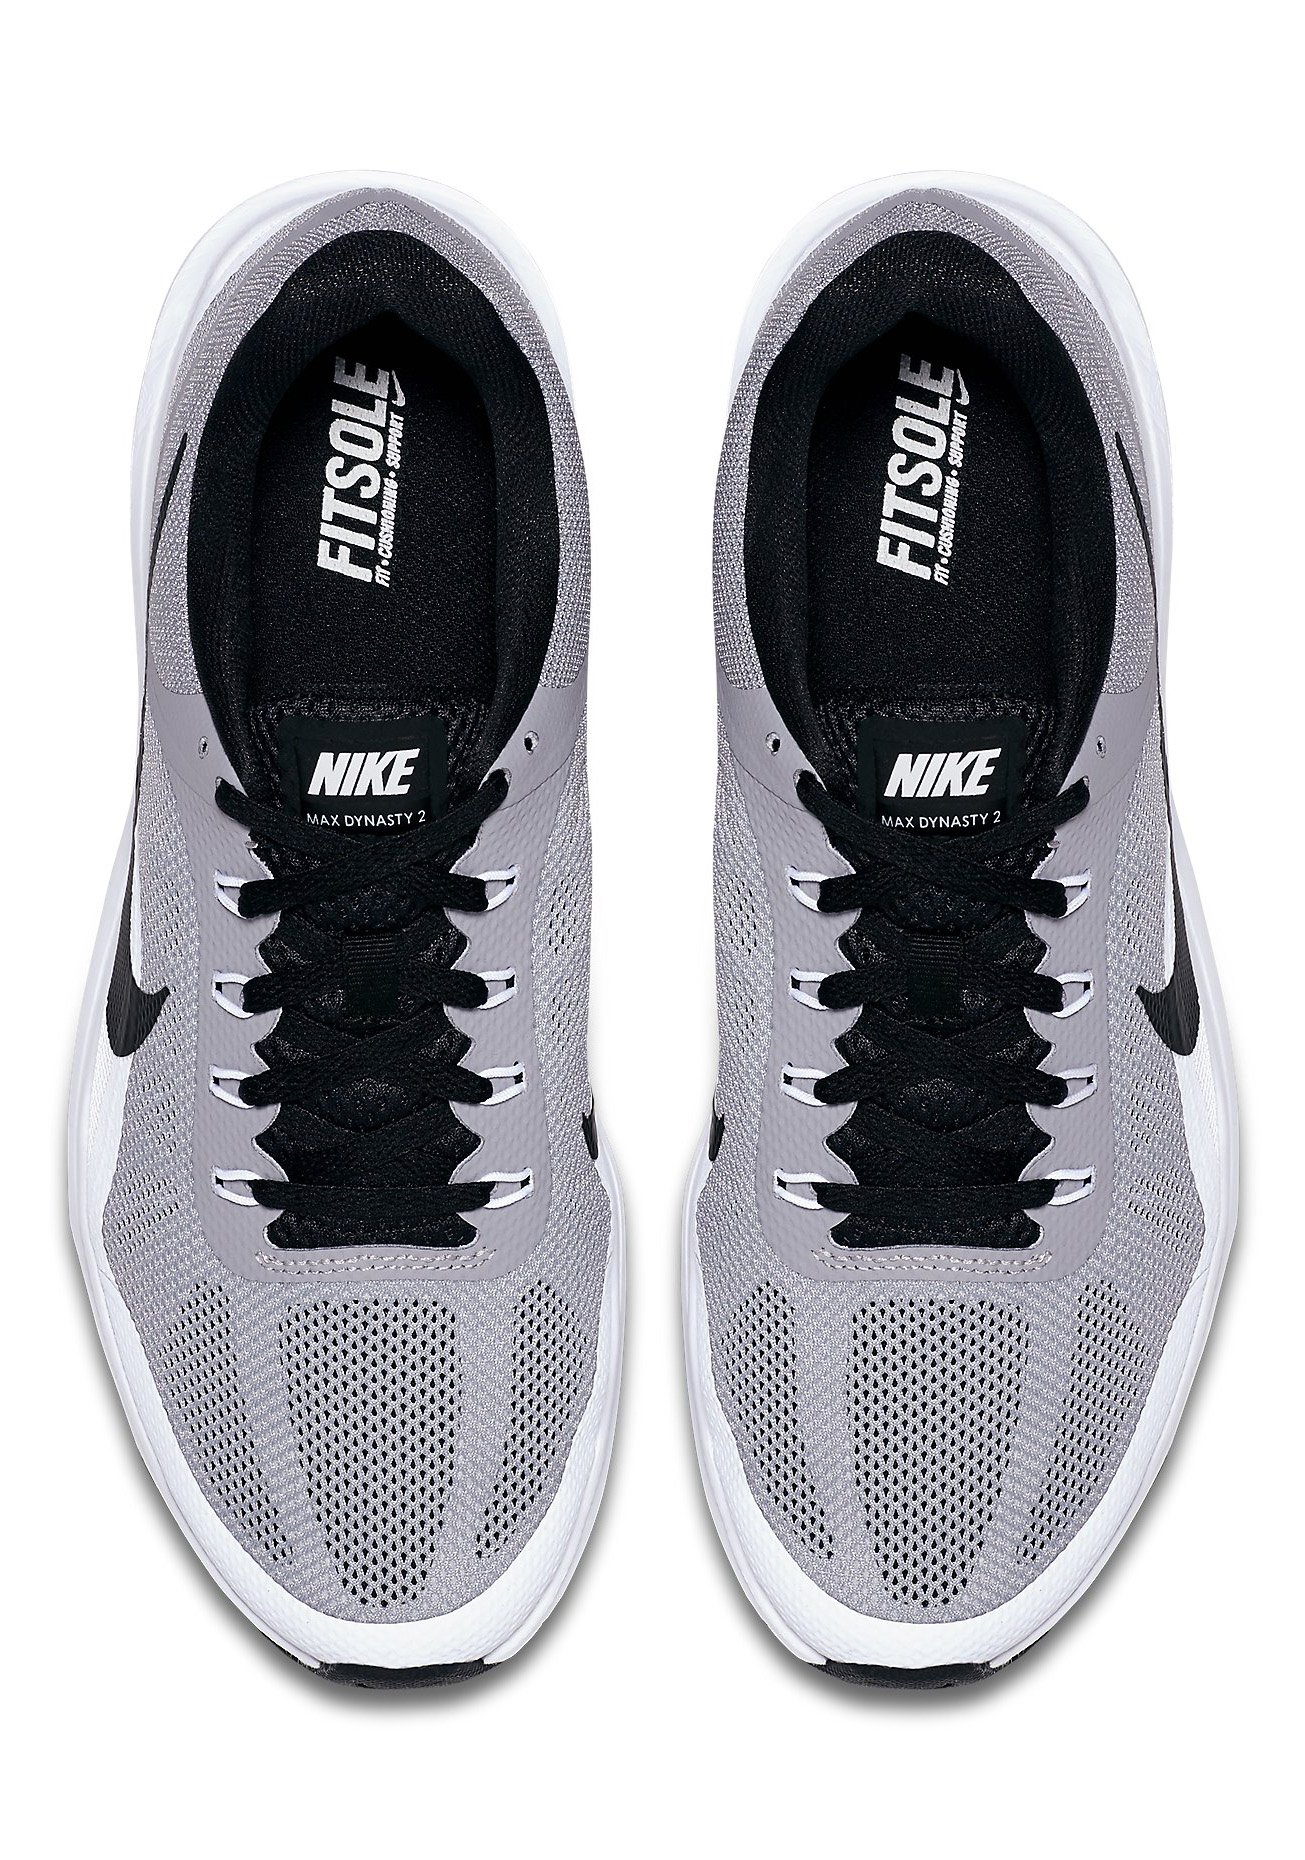 Devorar Pobreza extrema Magnético Trail shoes Nike AIR MAX DYNASTY 2 - Top4Running.com